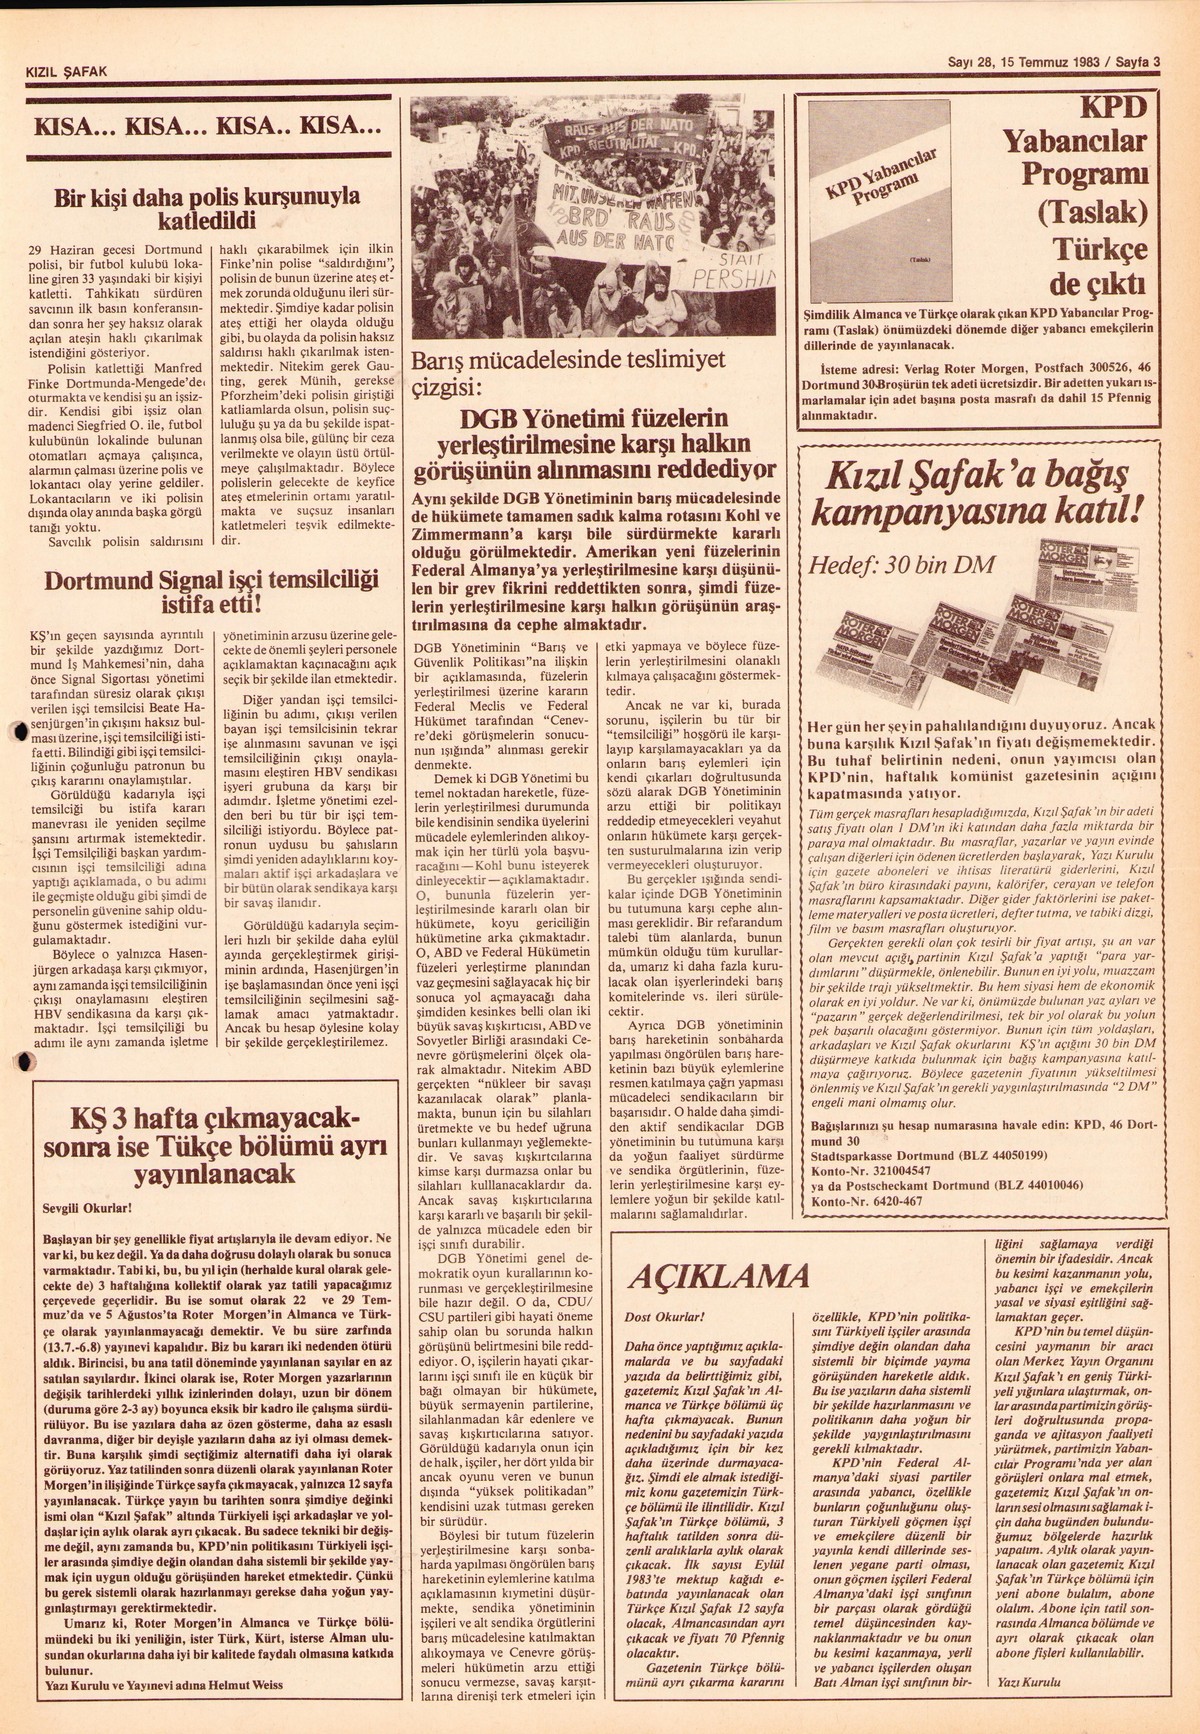 Roter Morgen, 17. Jg., 15. Juli 1983, Nr. 28/29, Seite 16